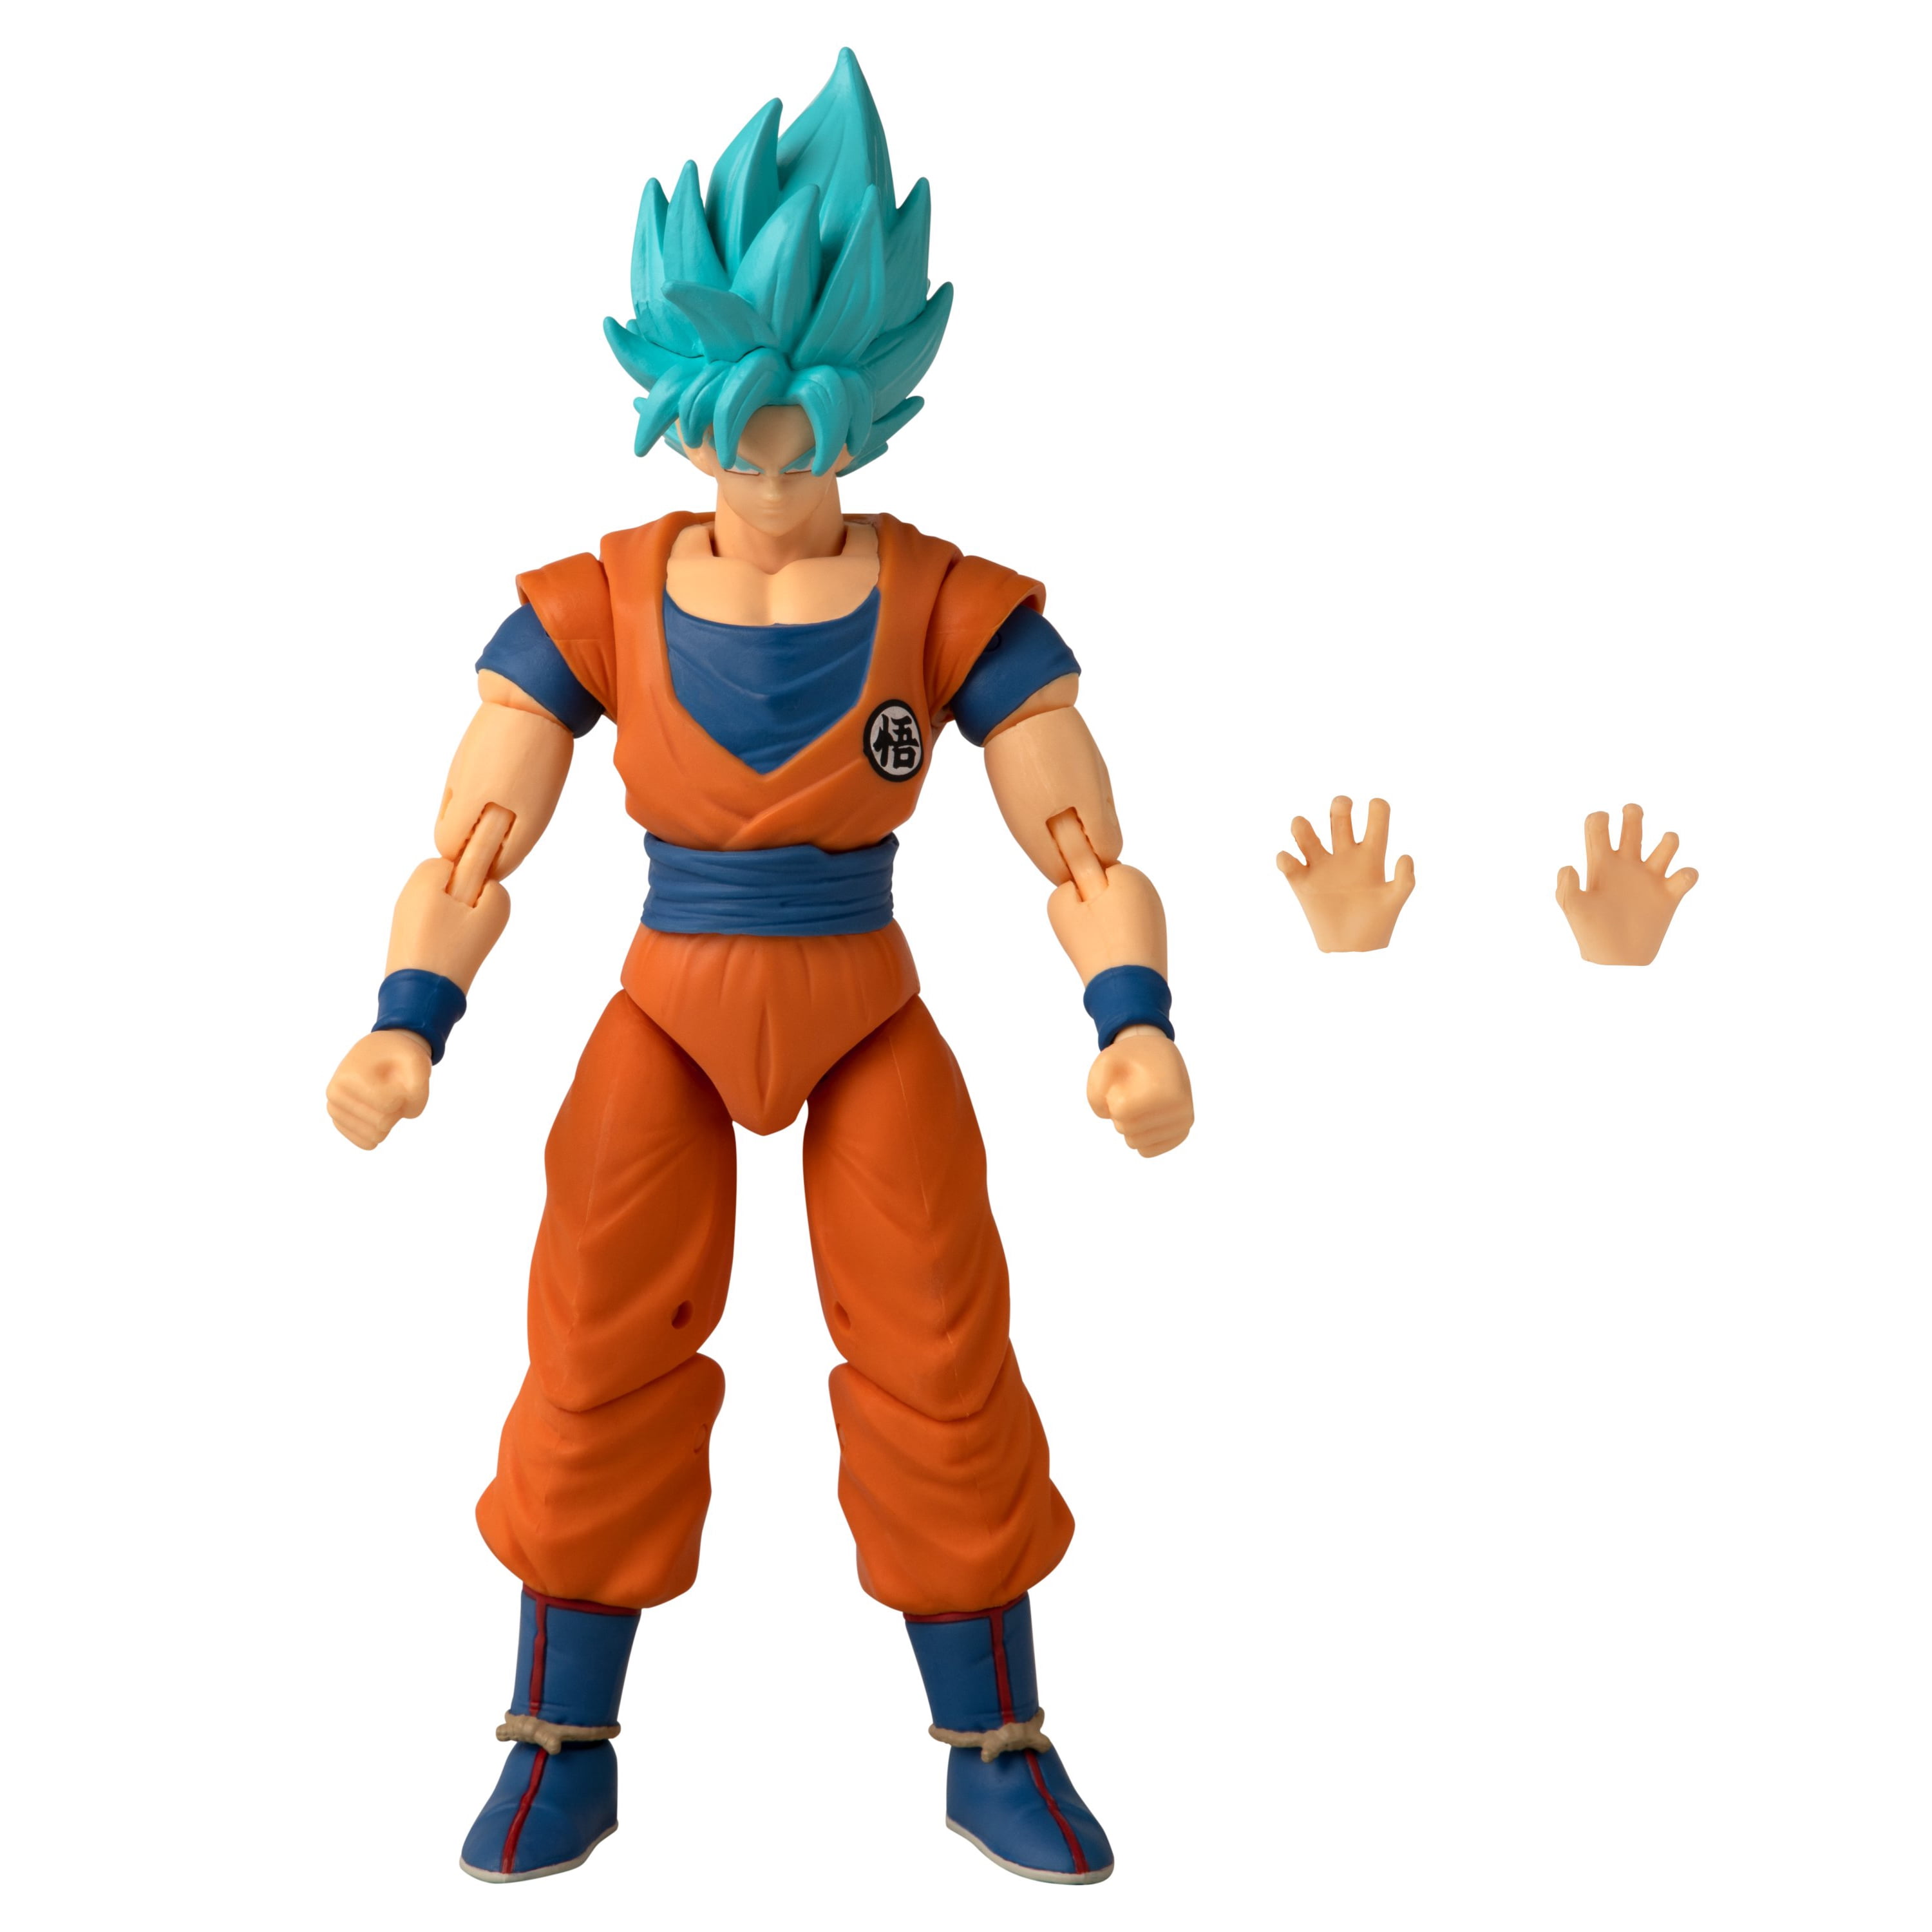 Dragon Ball Super Evolve - Super Saiyan Broly and Super Saiyan Blue Goku  Action Figure Set, 2 Pieces 